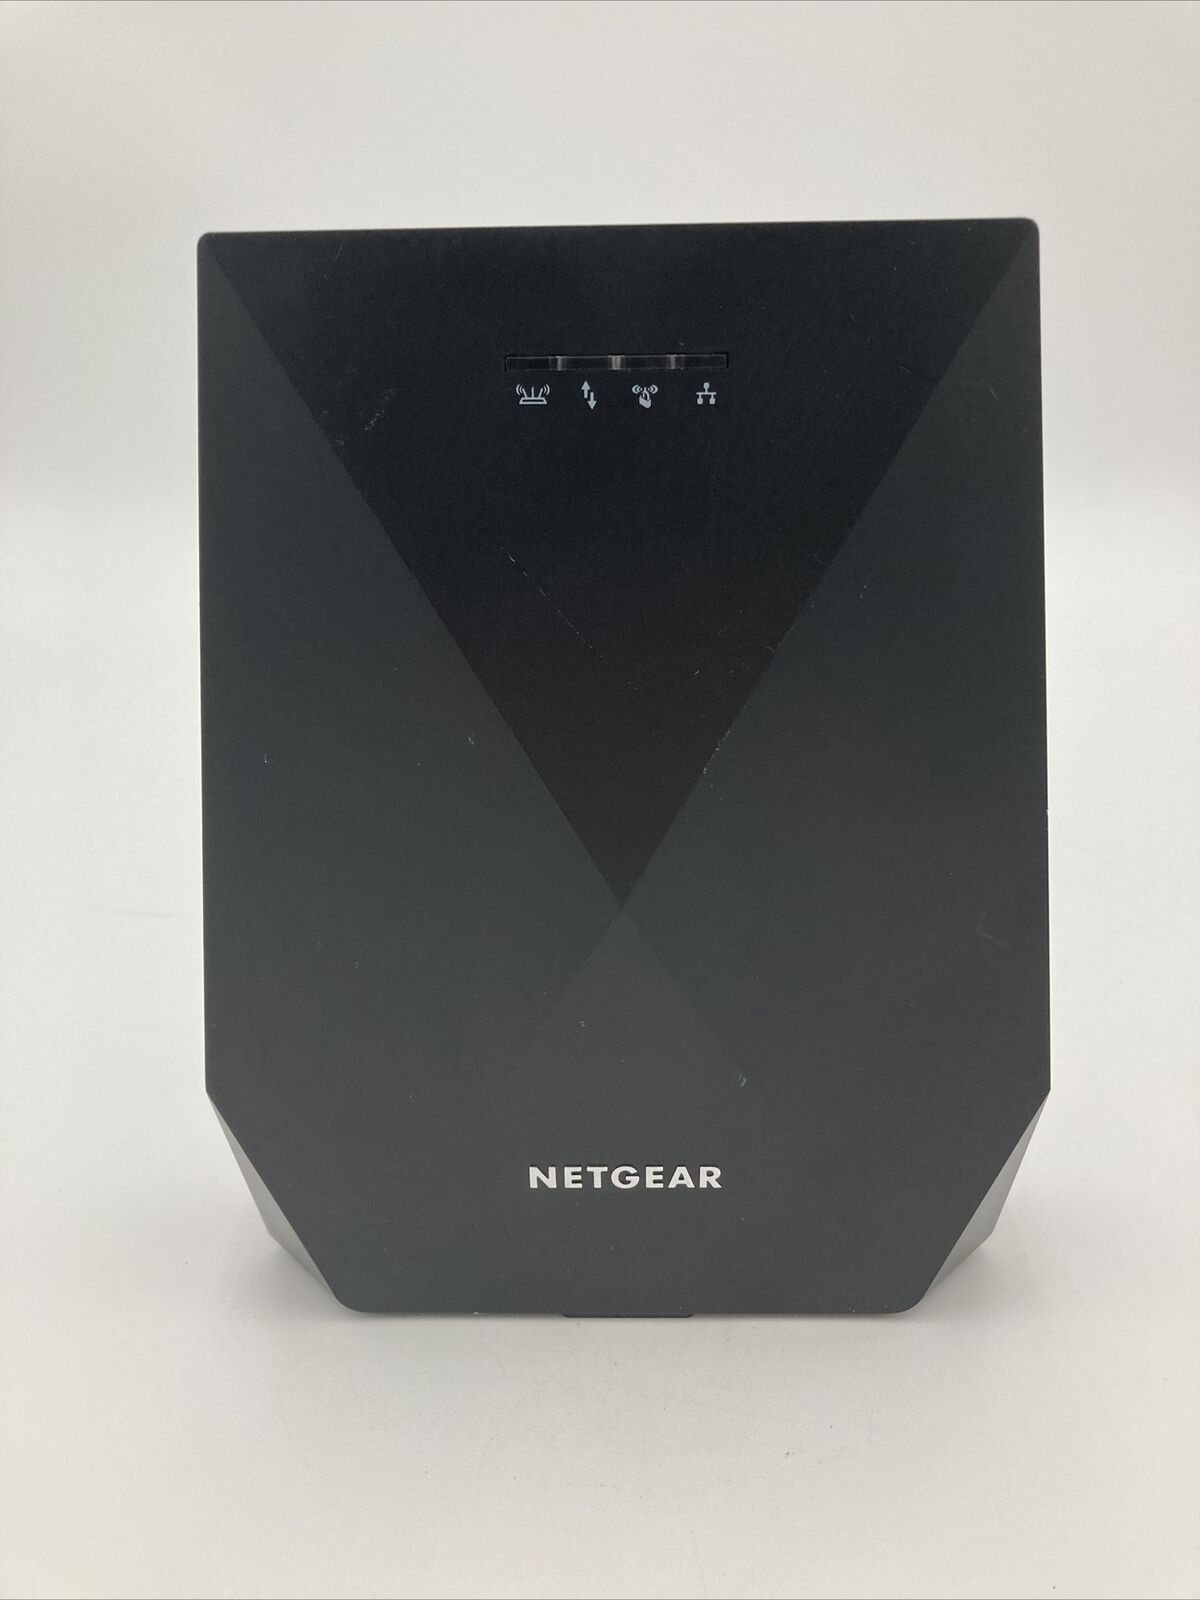 NETGEAR Nighthawk X6 EX7700 AC2200 Tri-band WiFi Mesh Extender Router Tested